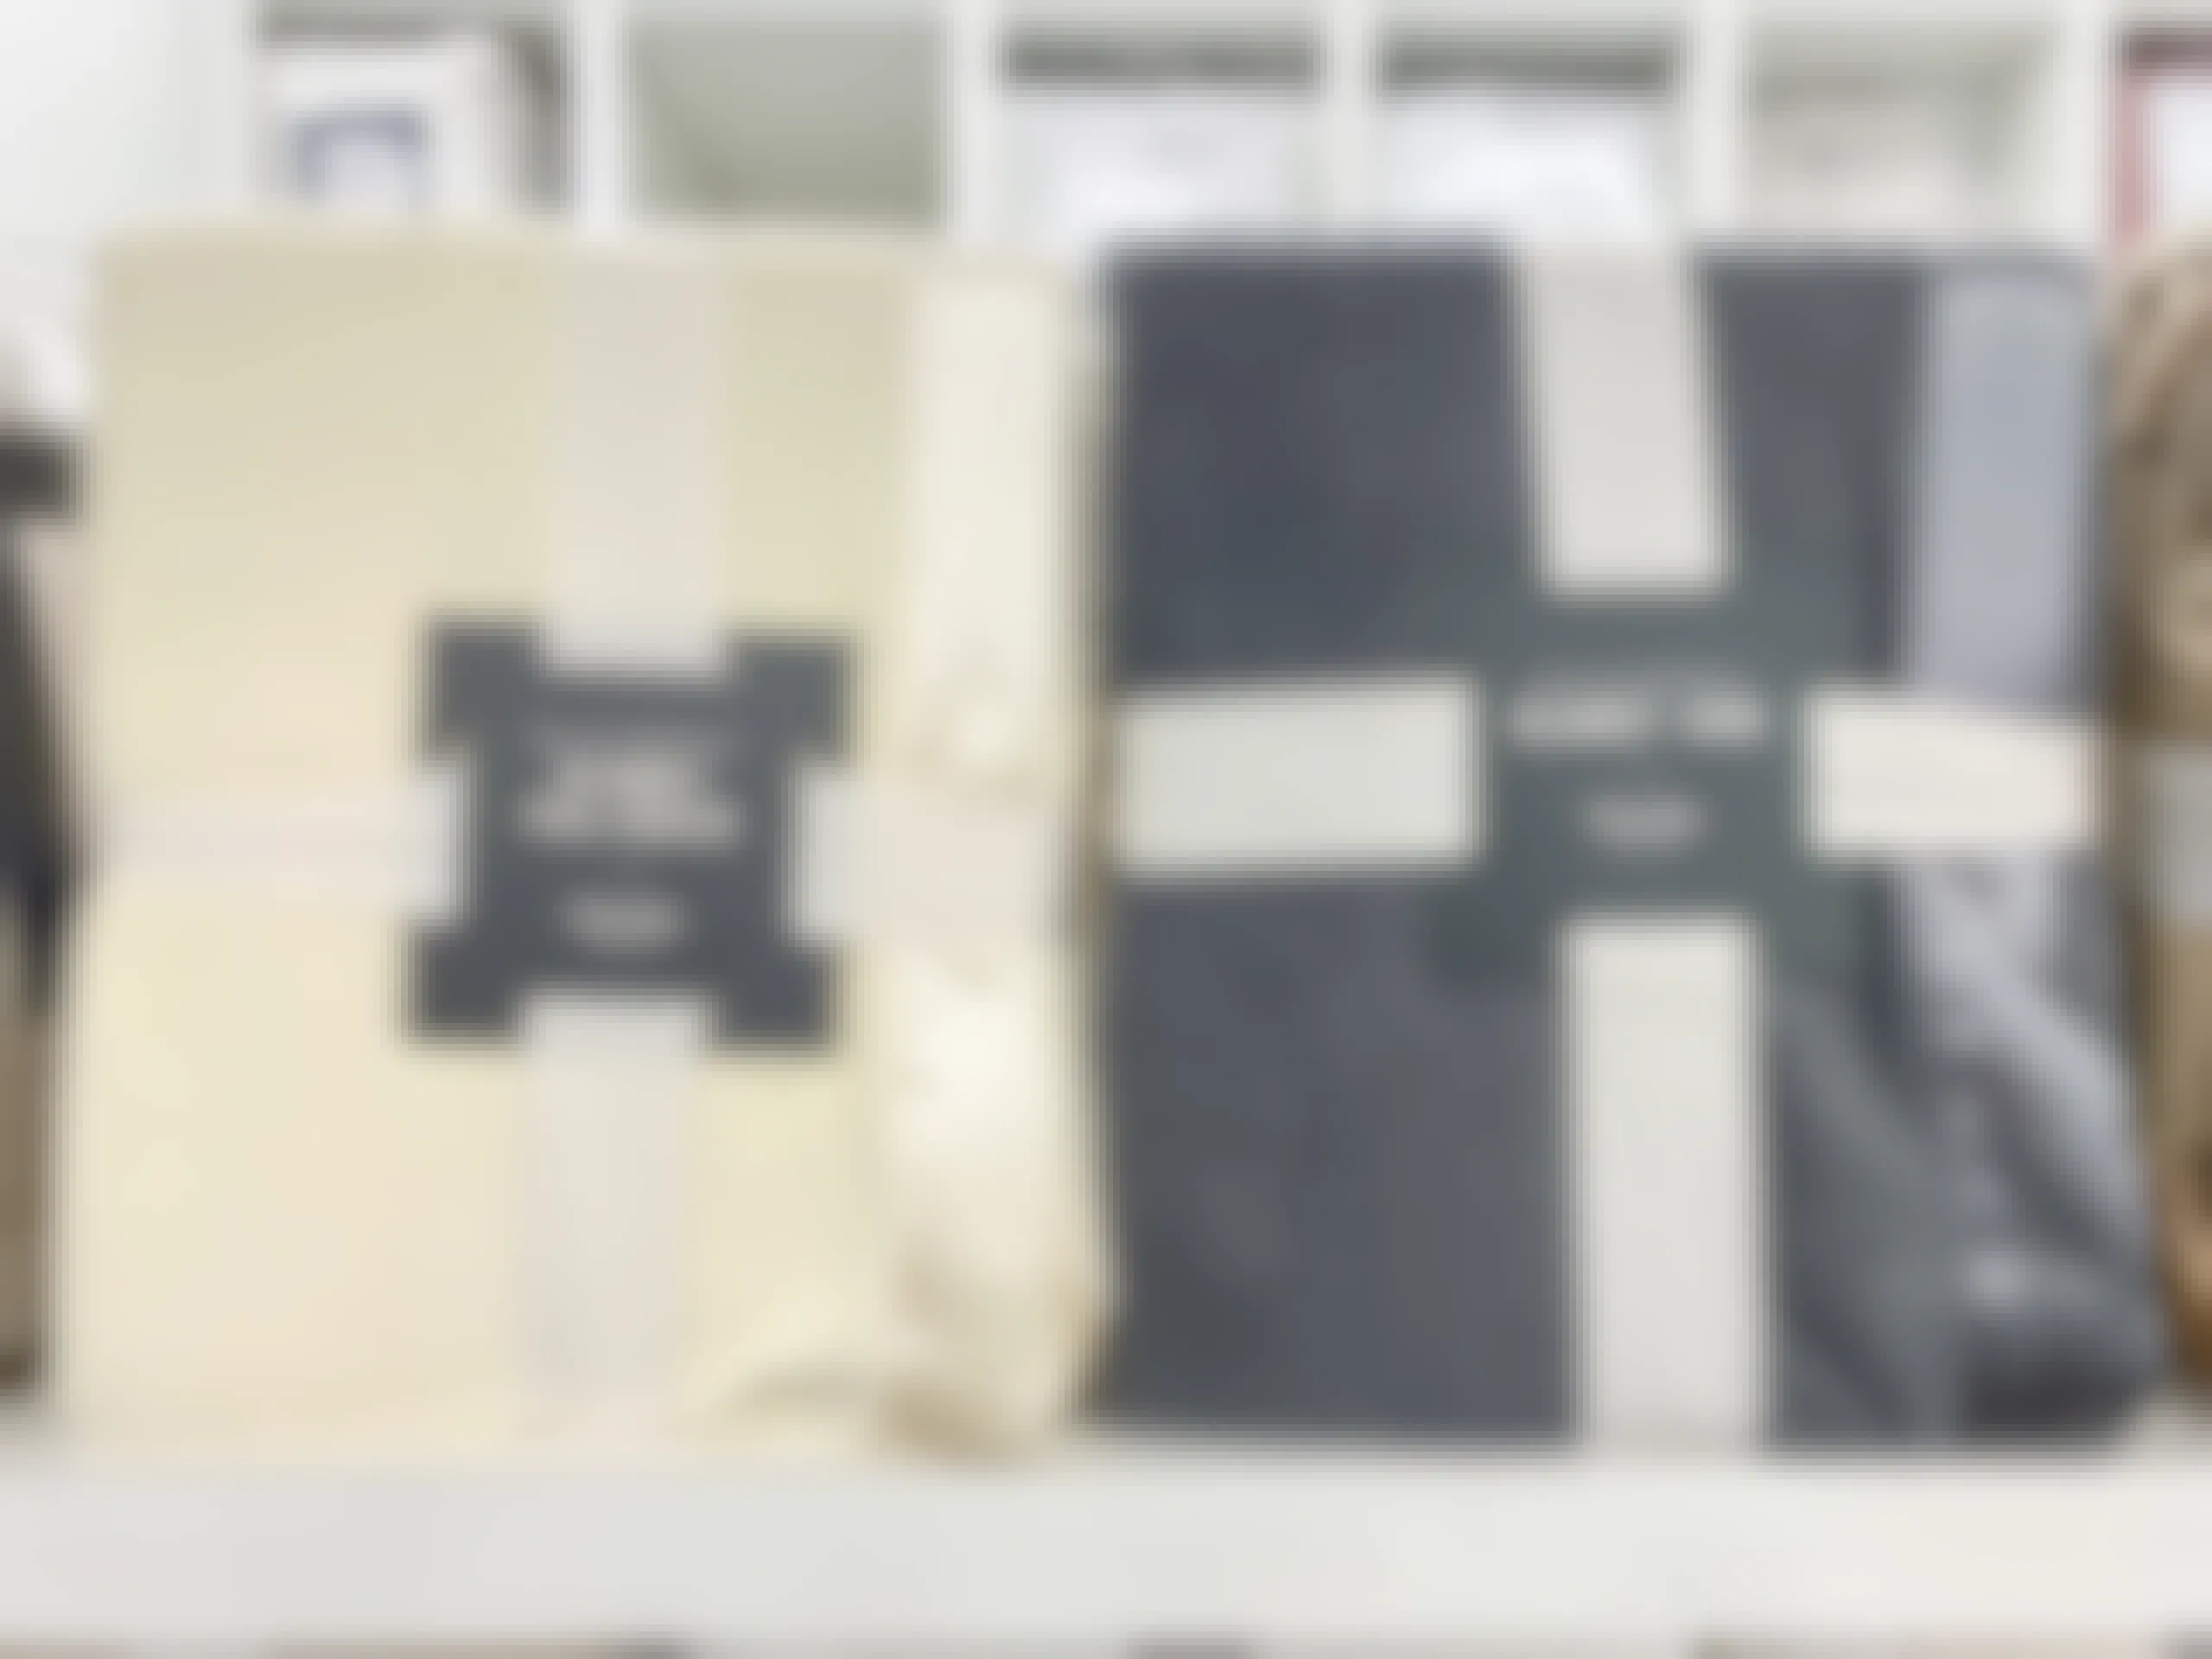 Martha Stewart Fleece blankets in cream and dark grey on a shelf